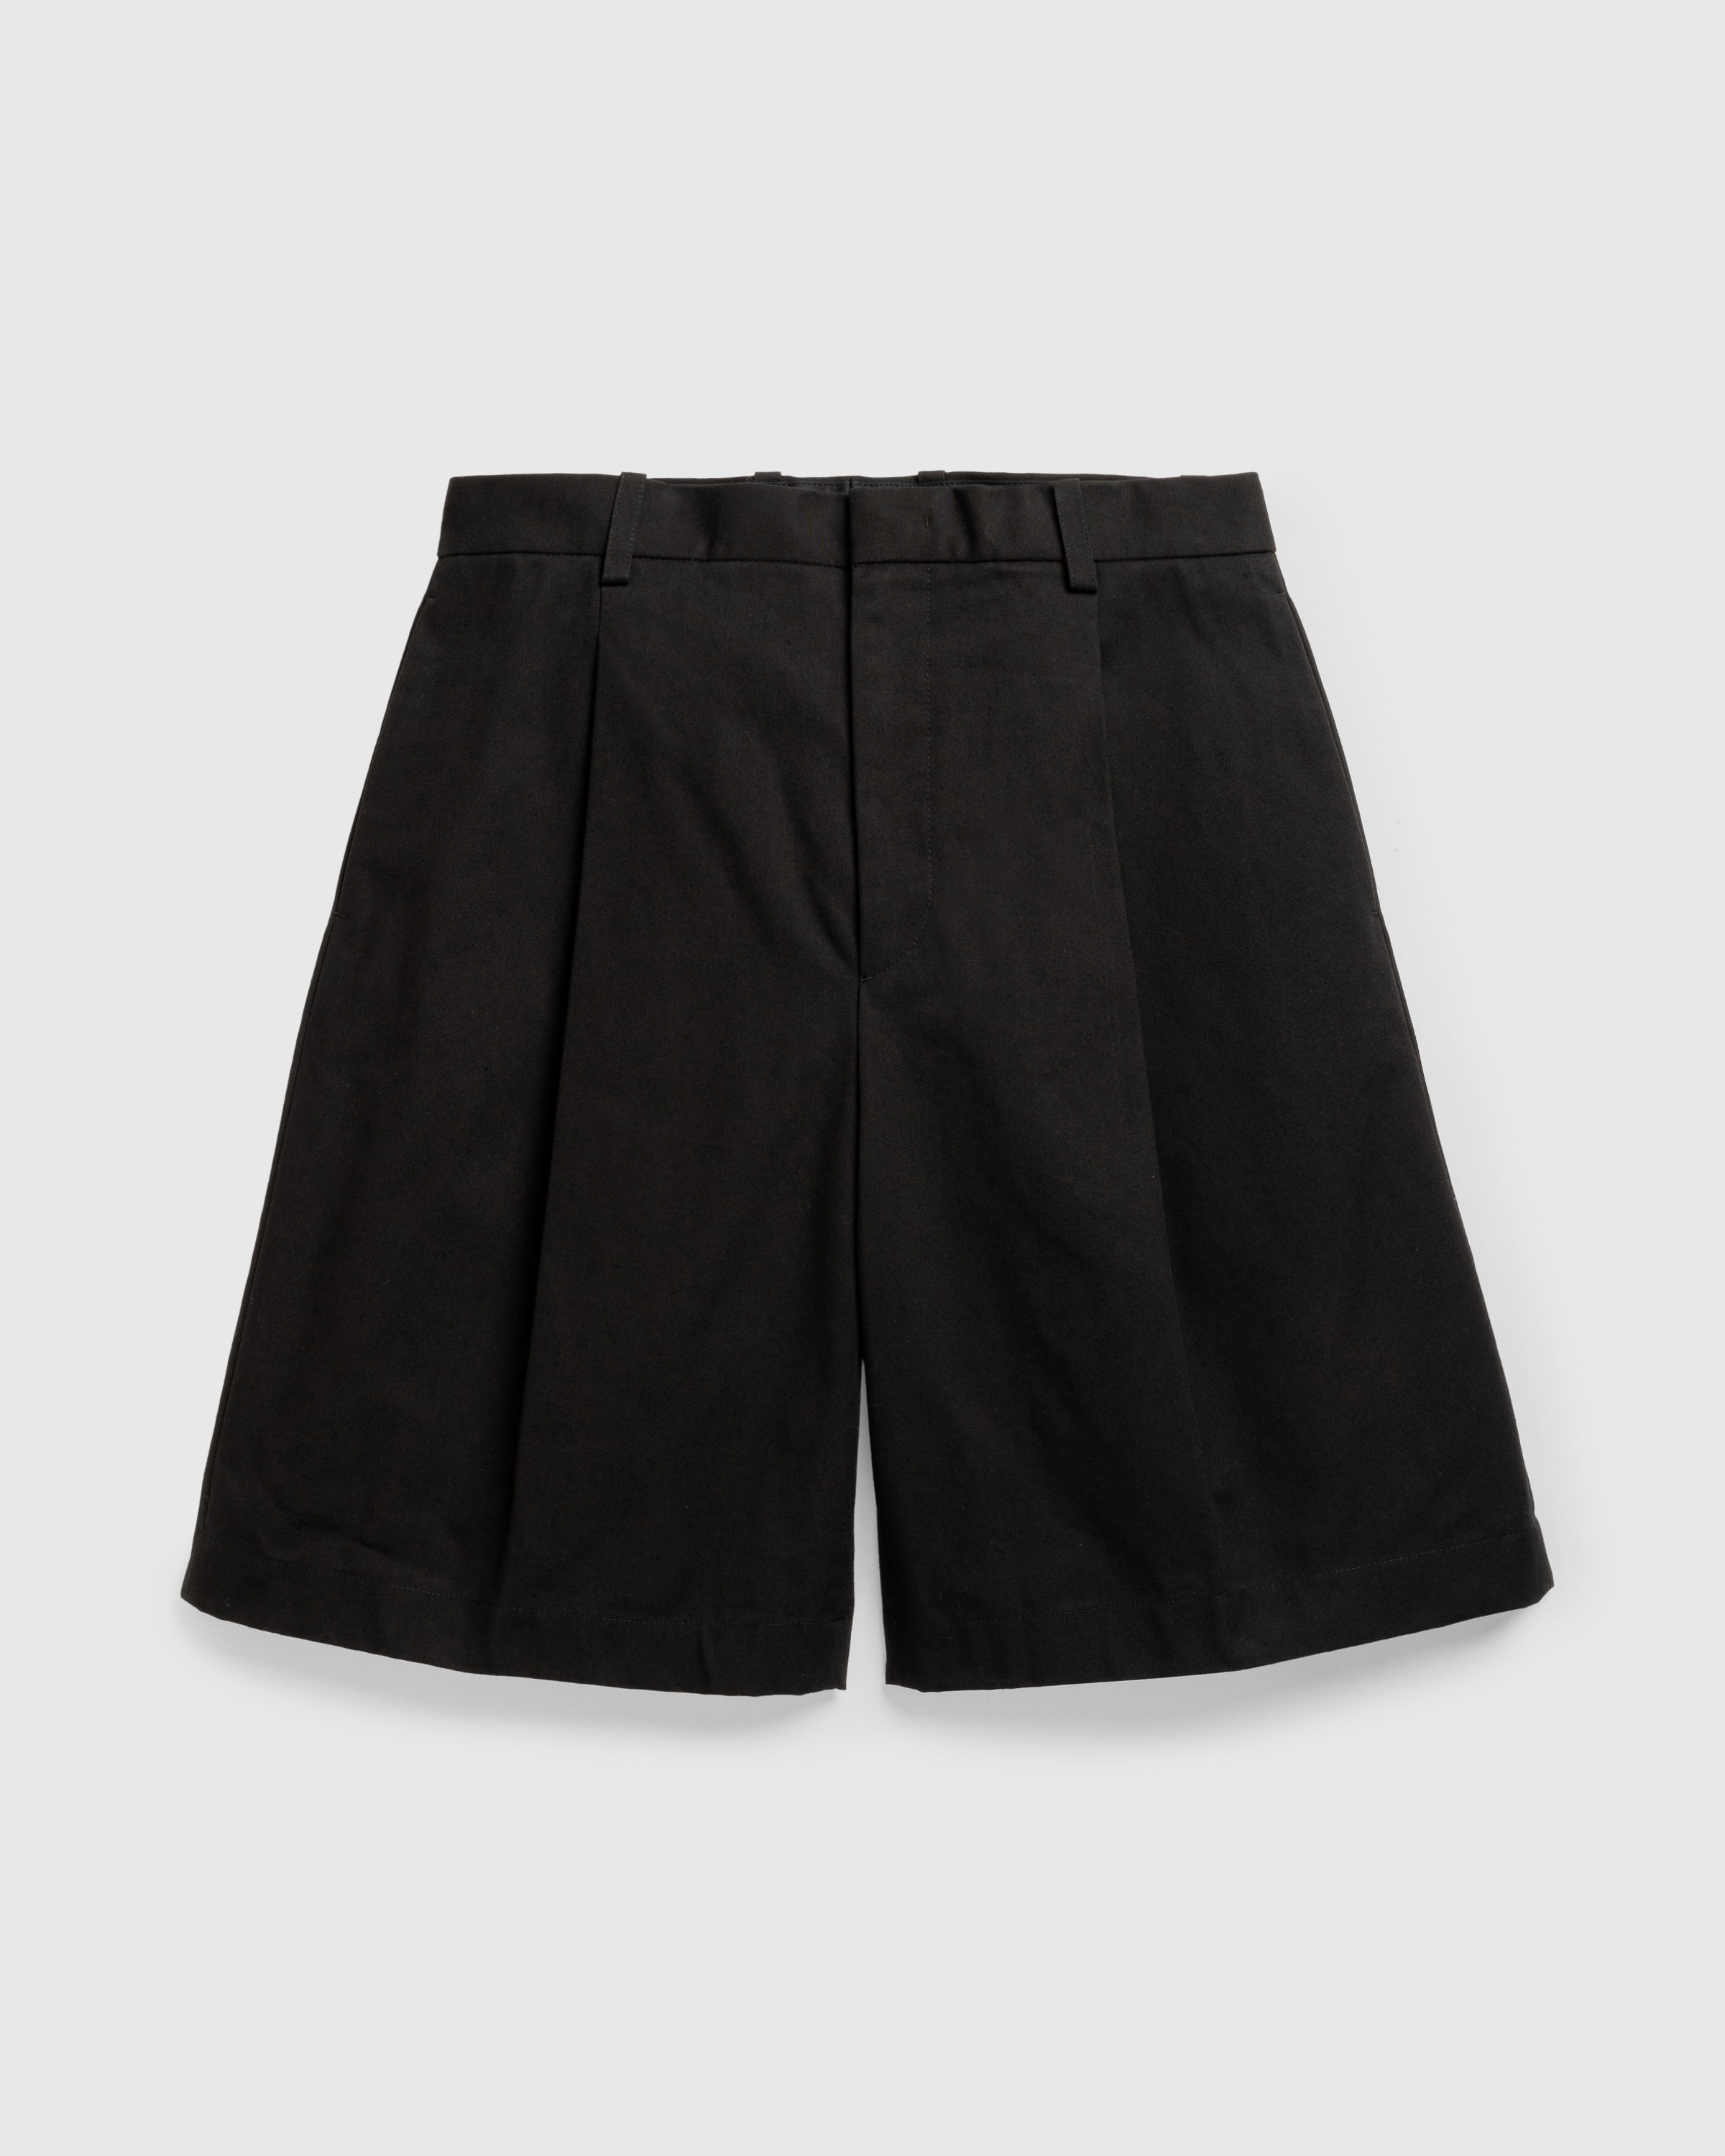 Jil Sander – Trouser 105 Shorts Black - Bermuda Cuts - Black - Image 1